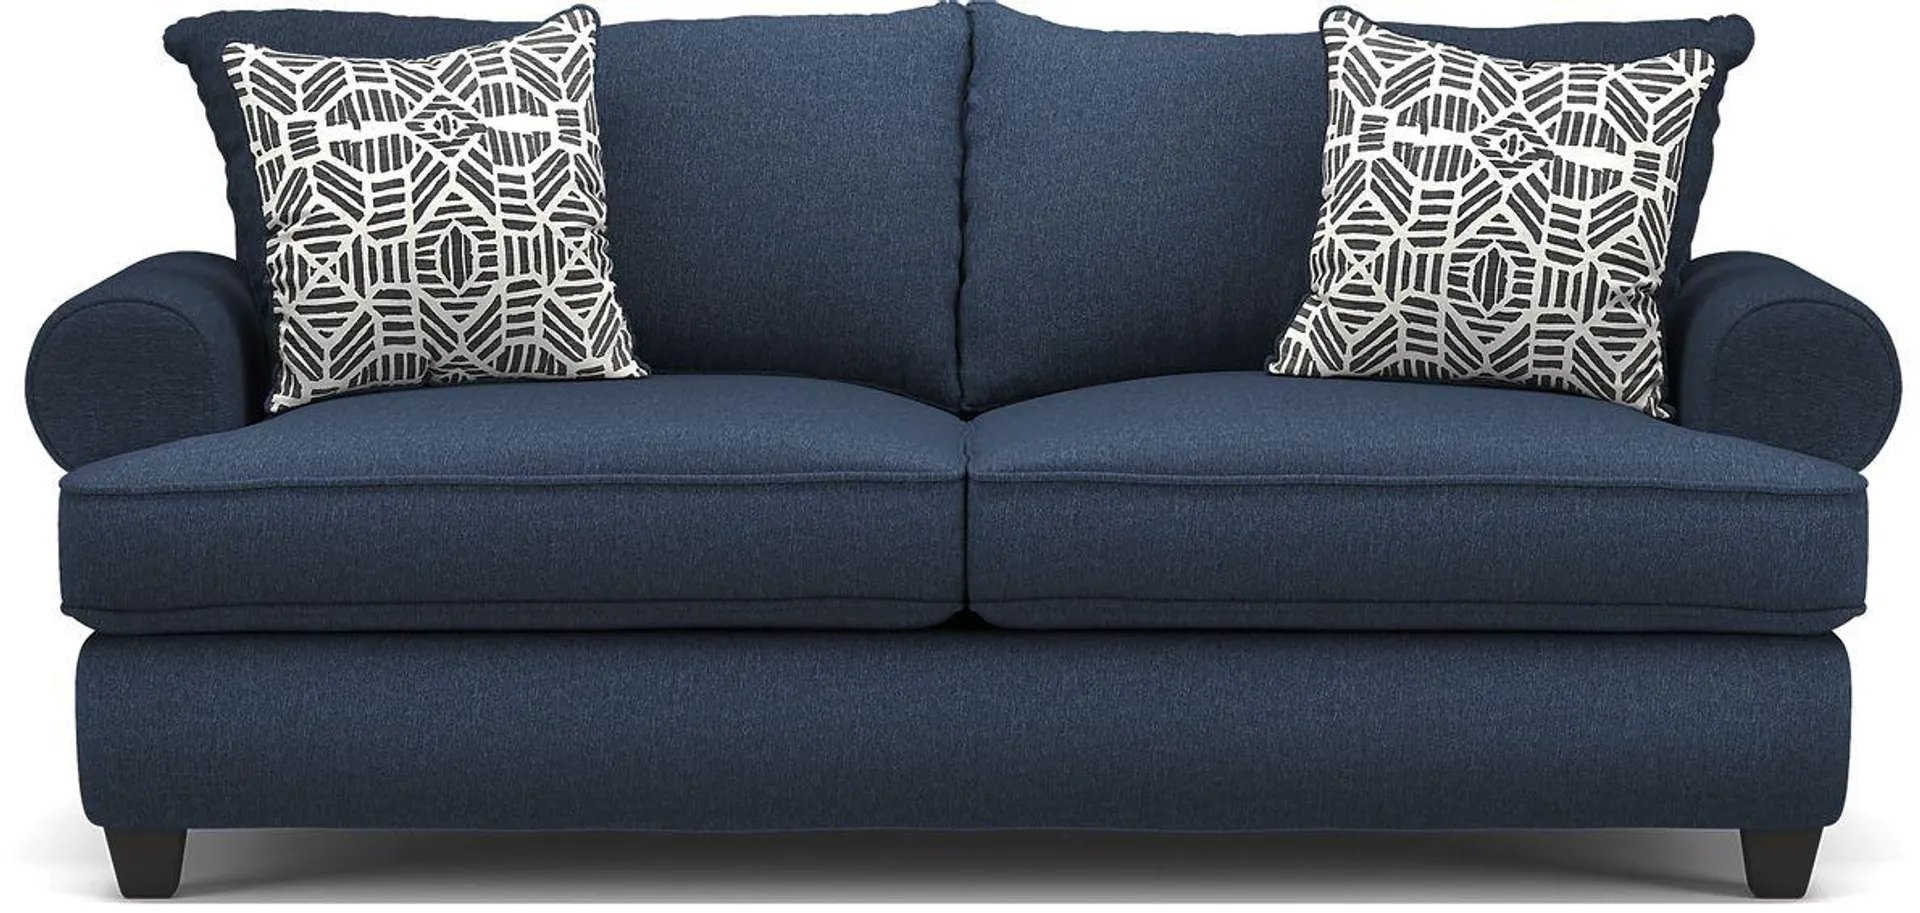 Emsworth Premium Sleeper Sofa